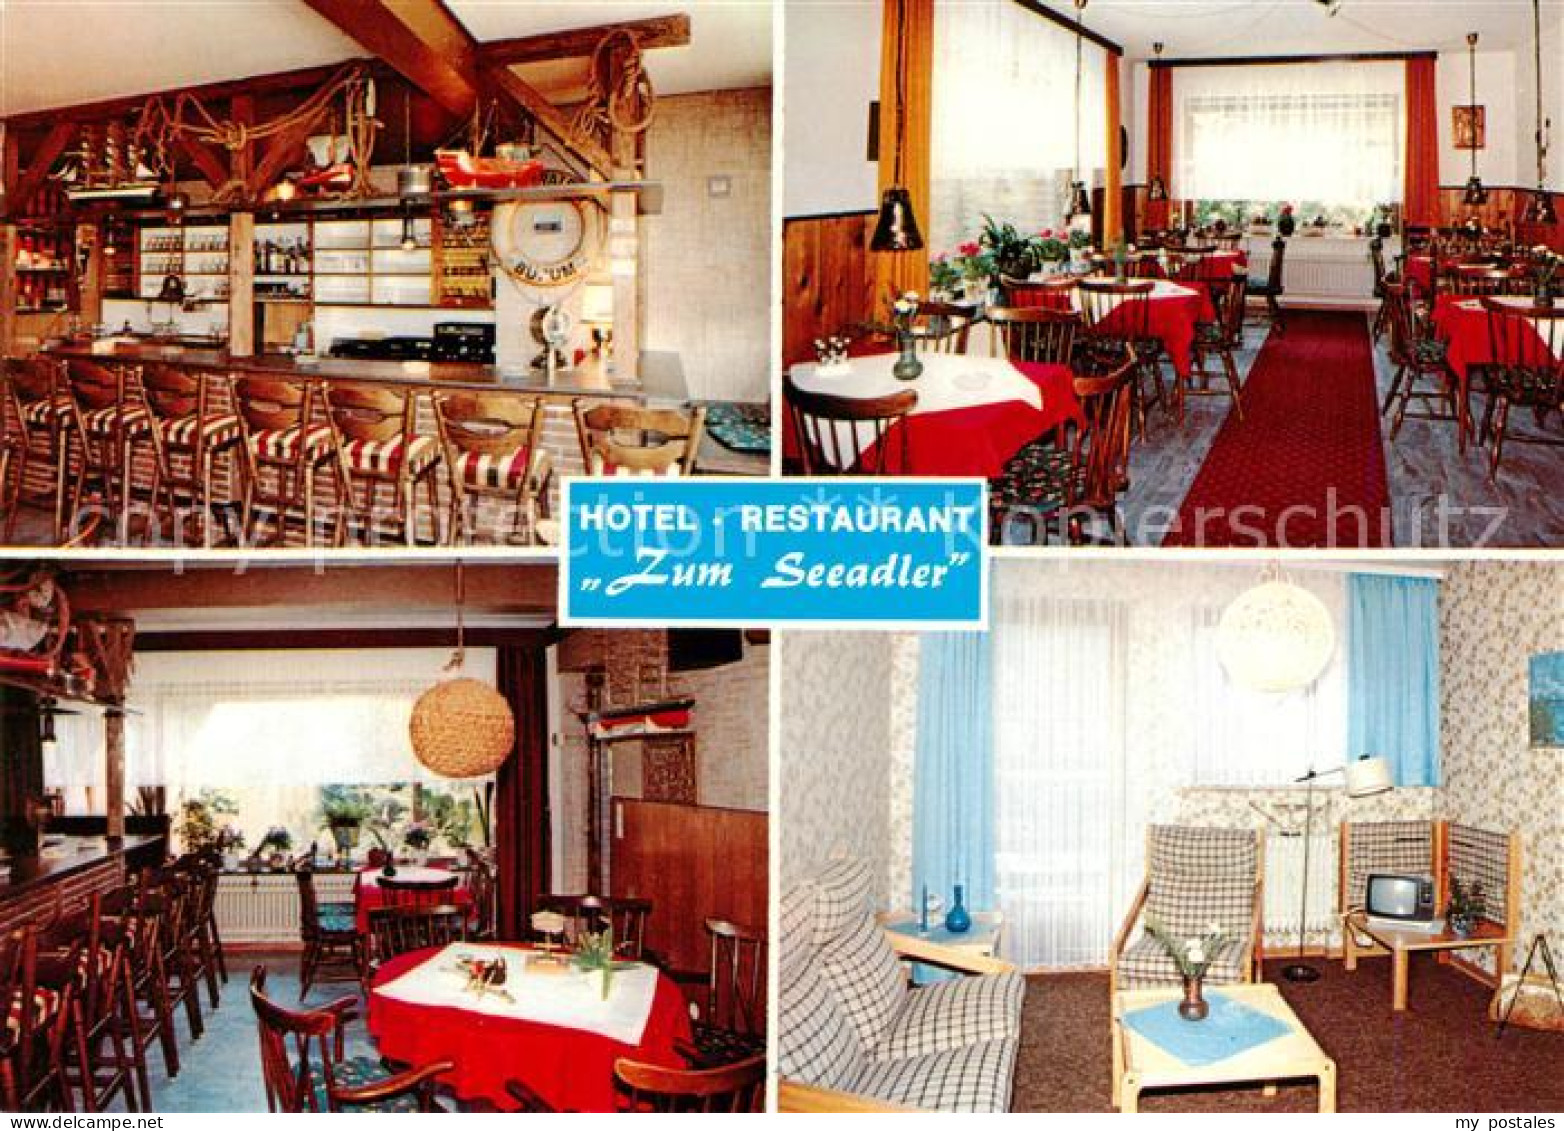 73848485 Buesum Nordseebad Apparthotel Restaurant Zum Seeadler Buesum Nordseebad - Büsum